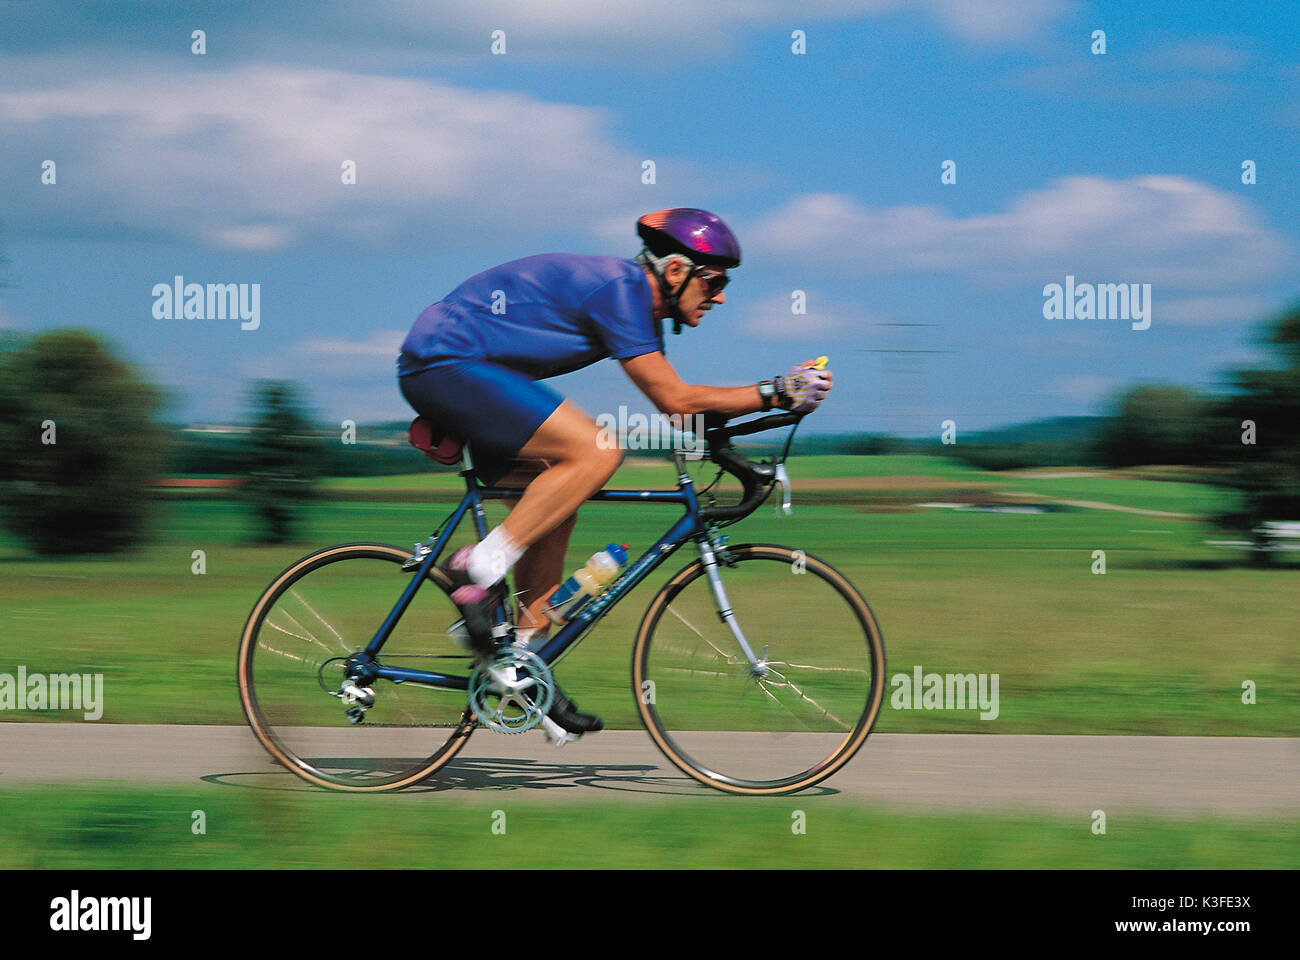 Racing cycle sportsman on bicycle Stock Photo